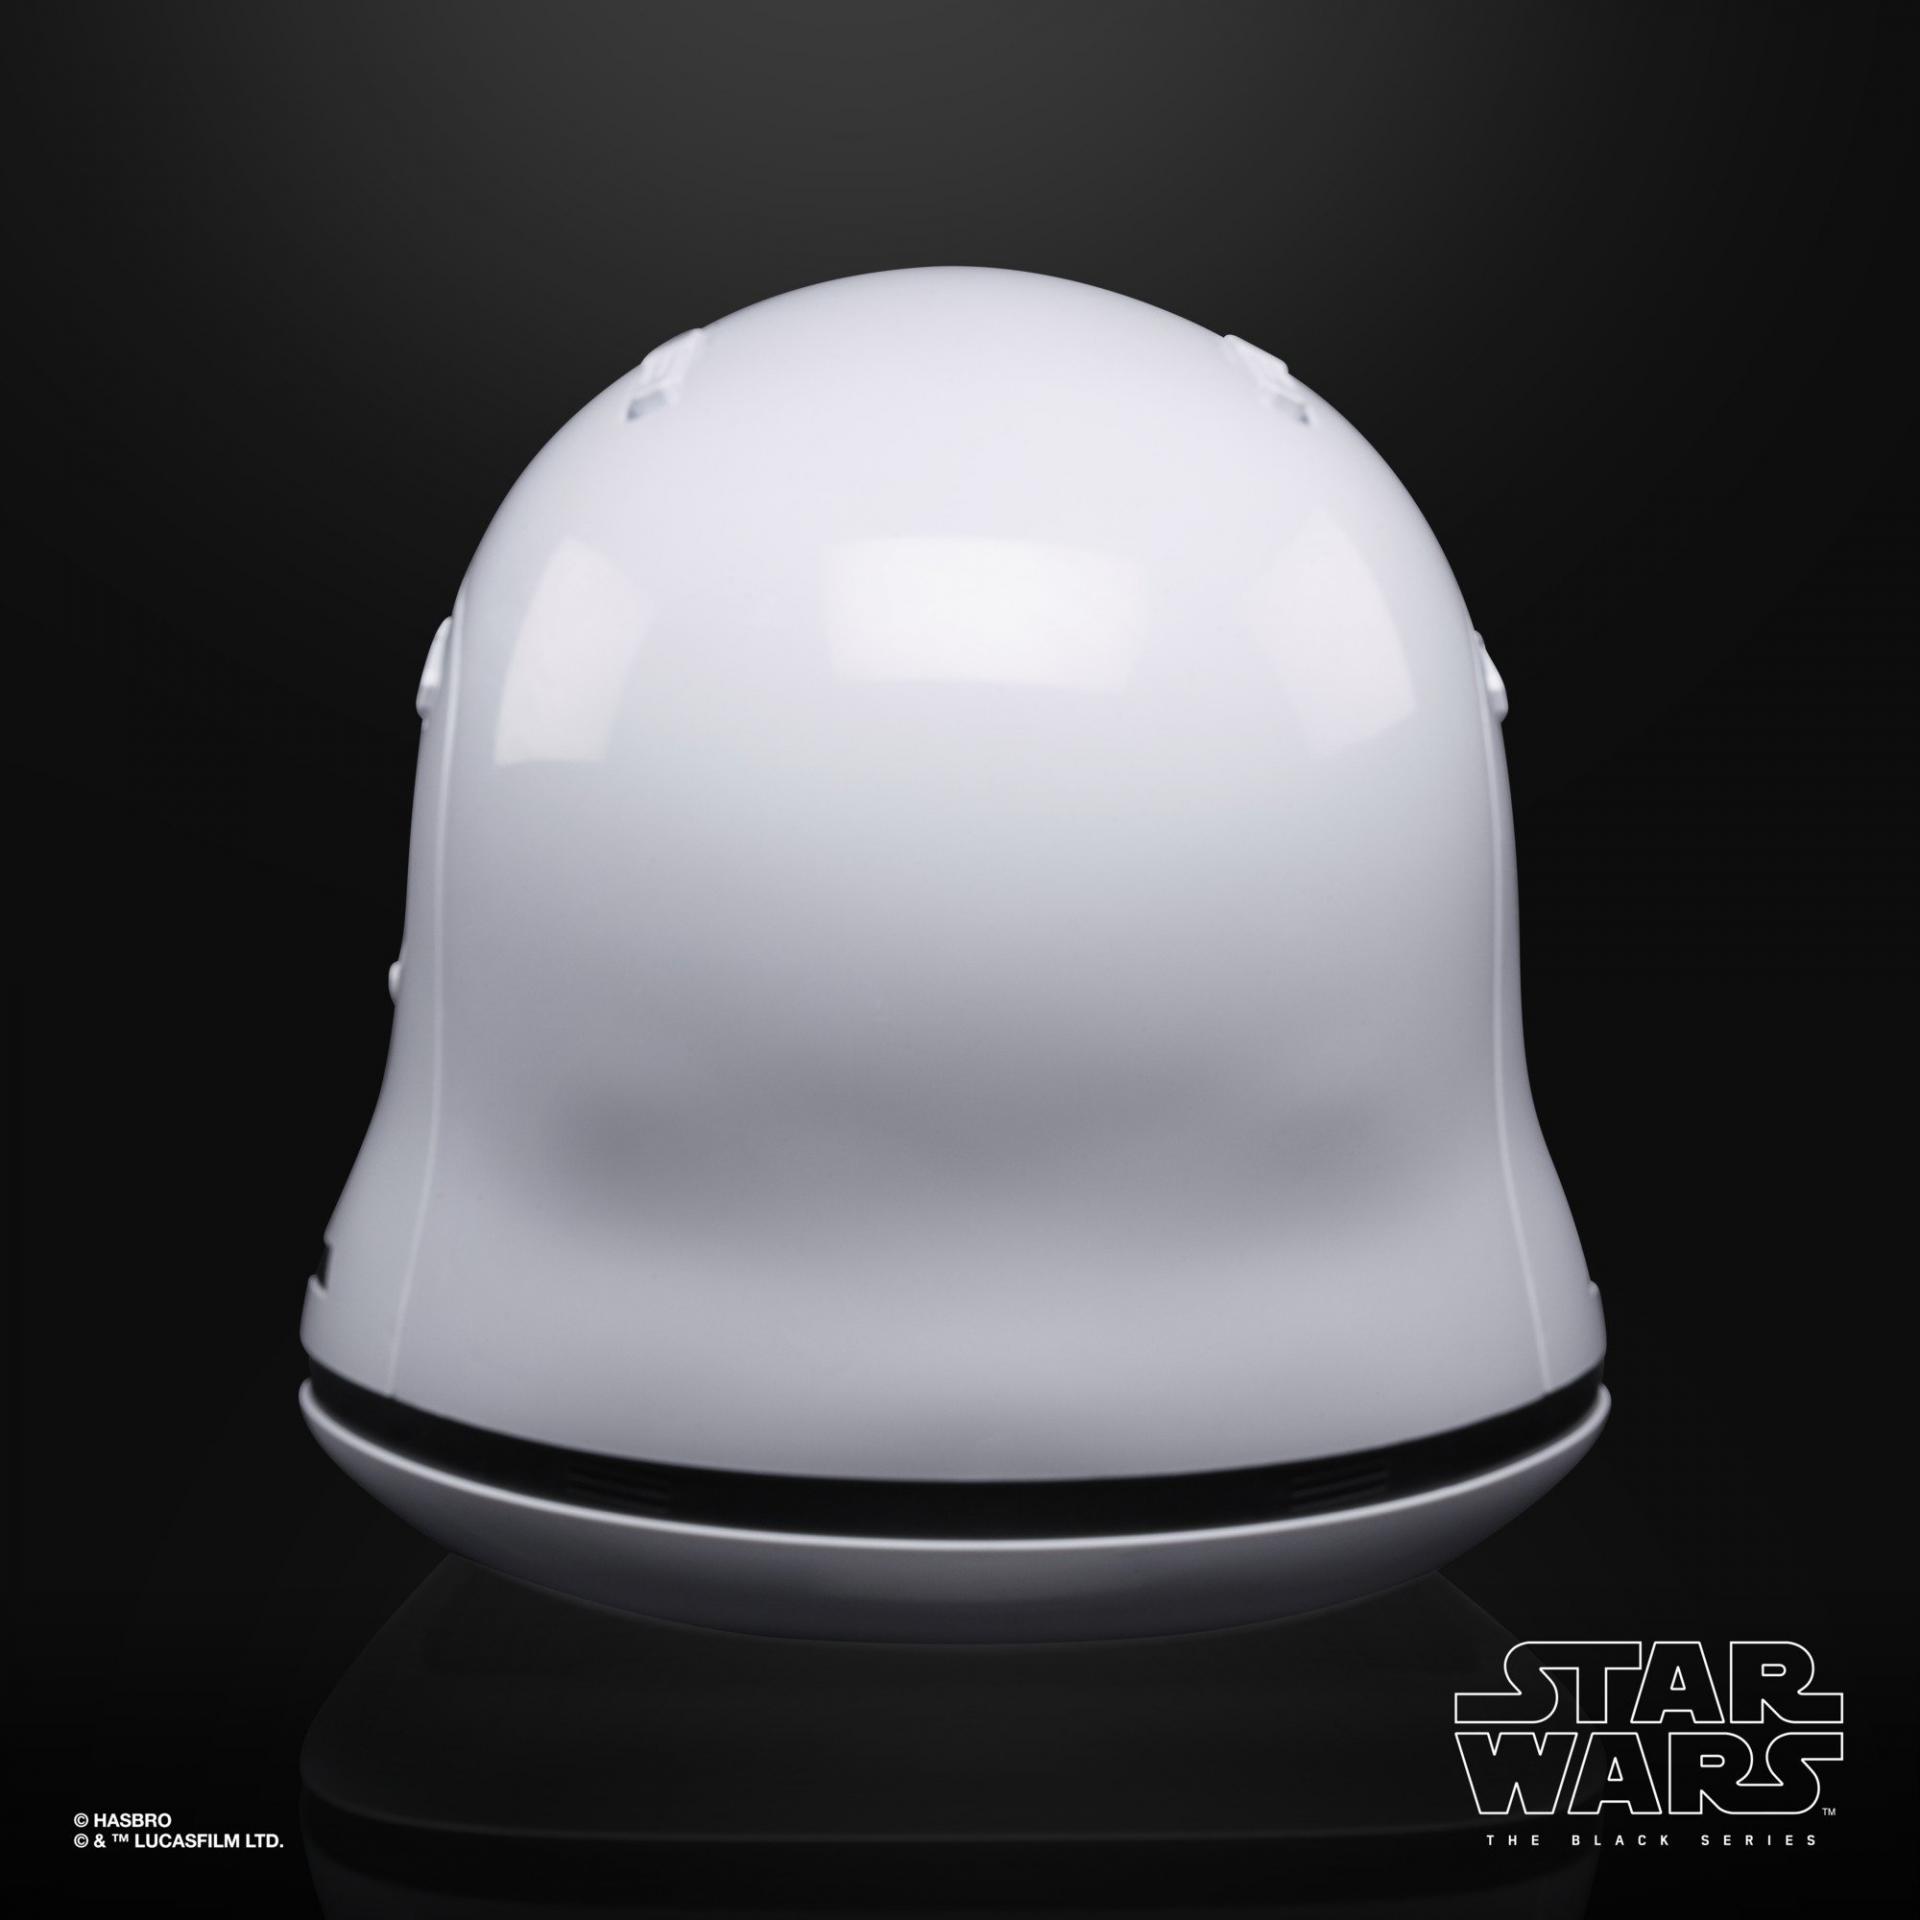 Star wars the black series first order stormtrooper electronic helmet5